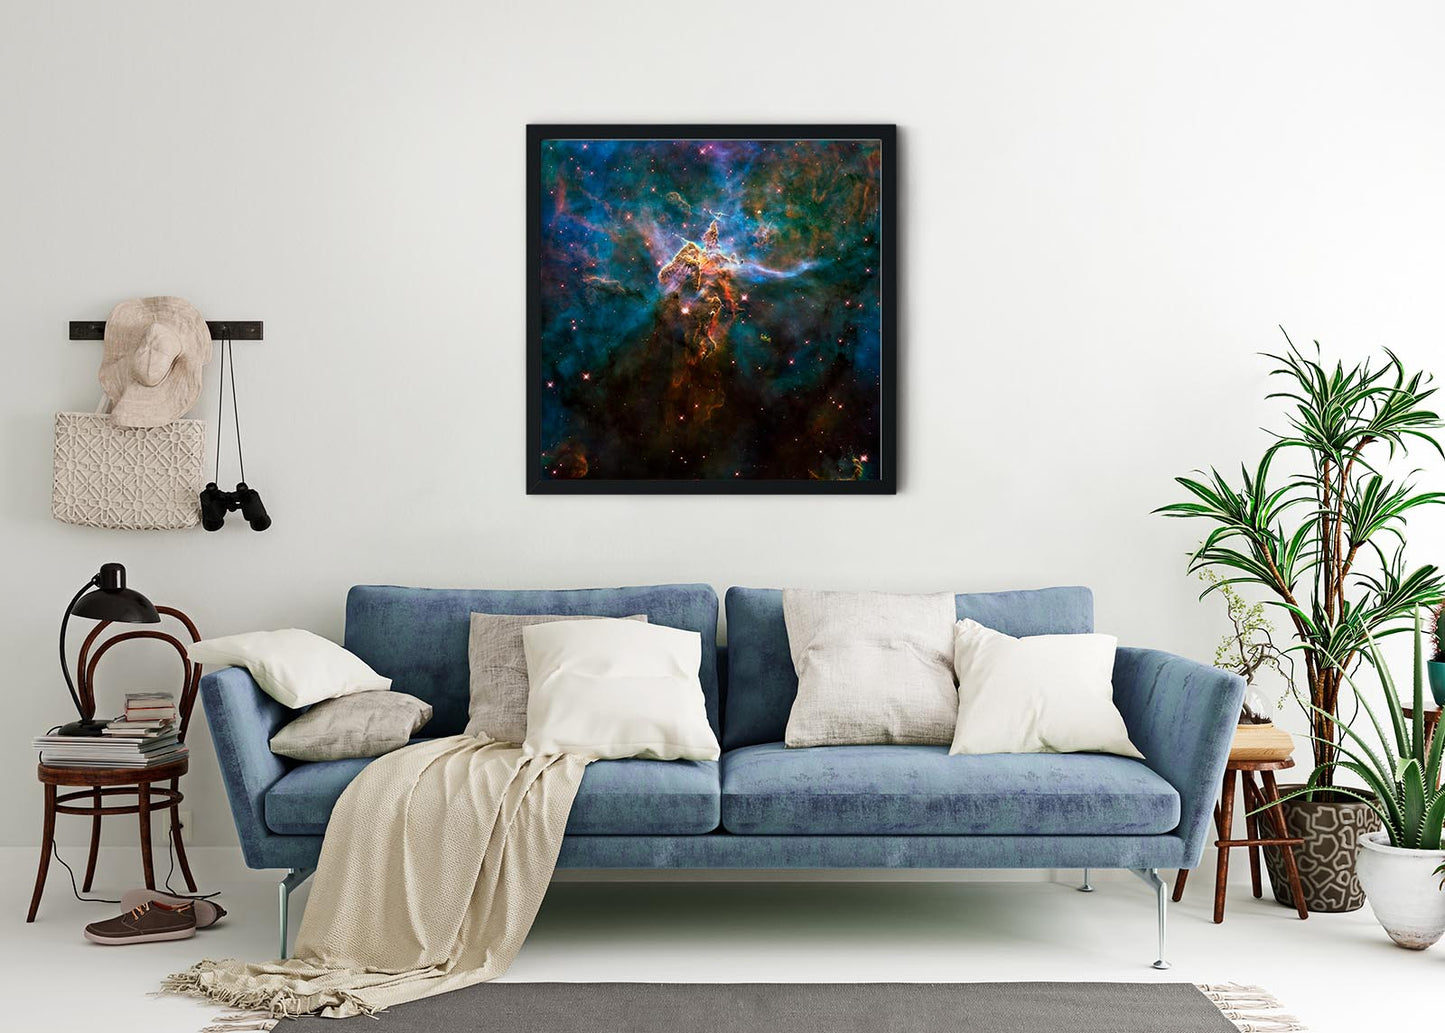 Image of a nebula taken using a NASA telescope, Zoom out NASA